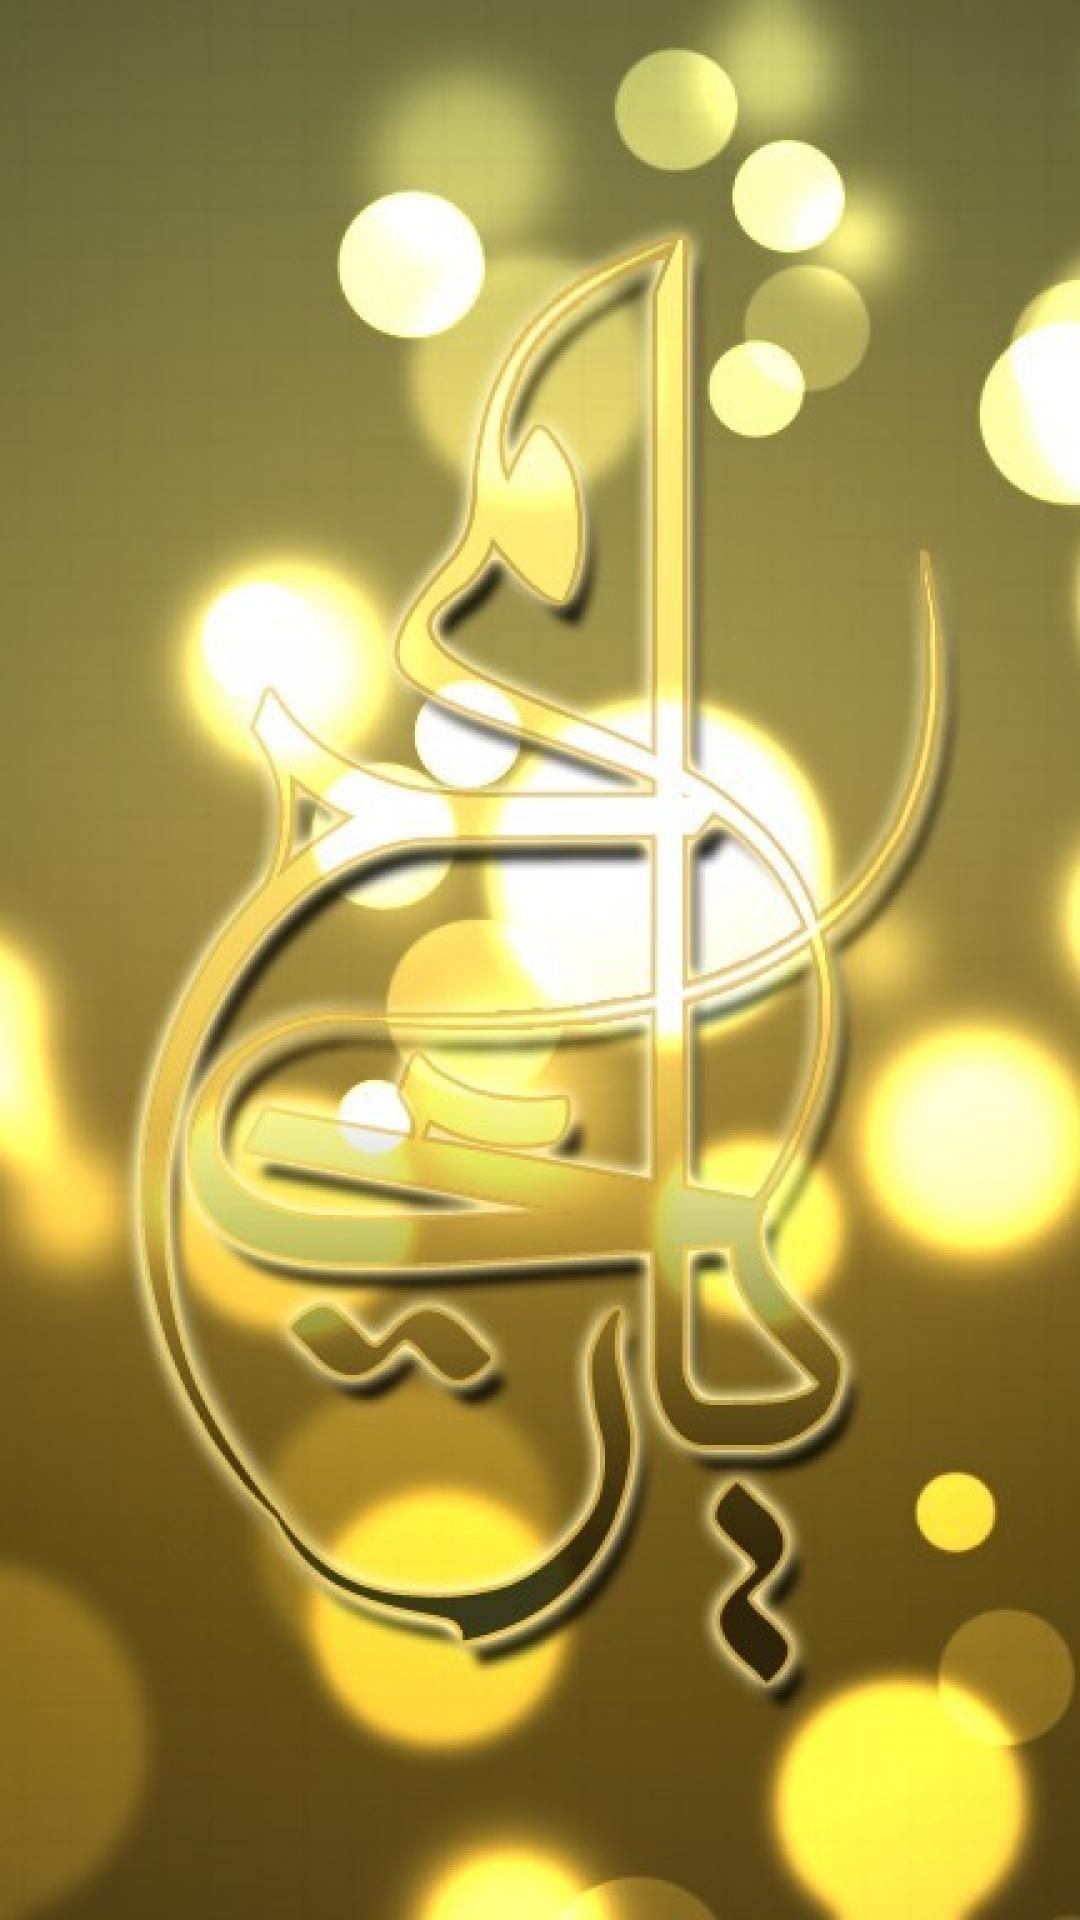 Islamic Wallpaper HD Download: Islamic Wallpaper HD For Mobile